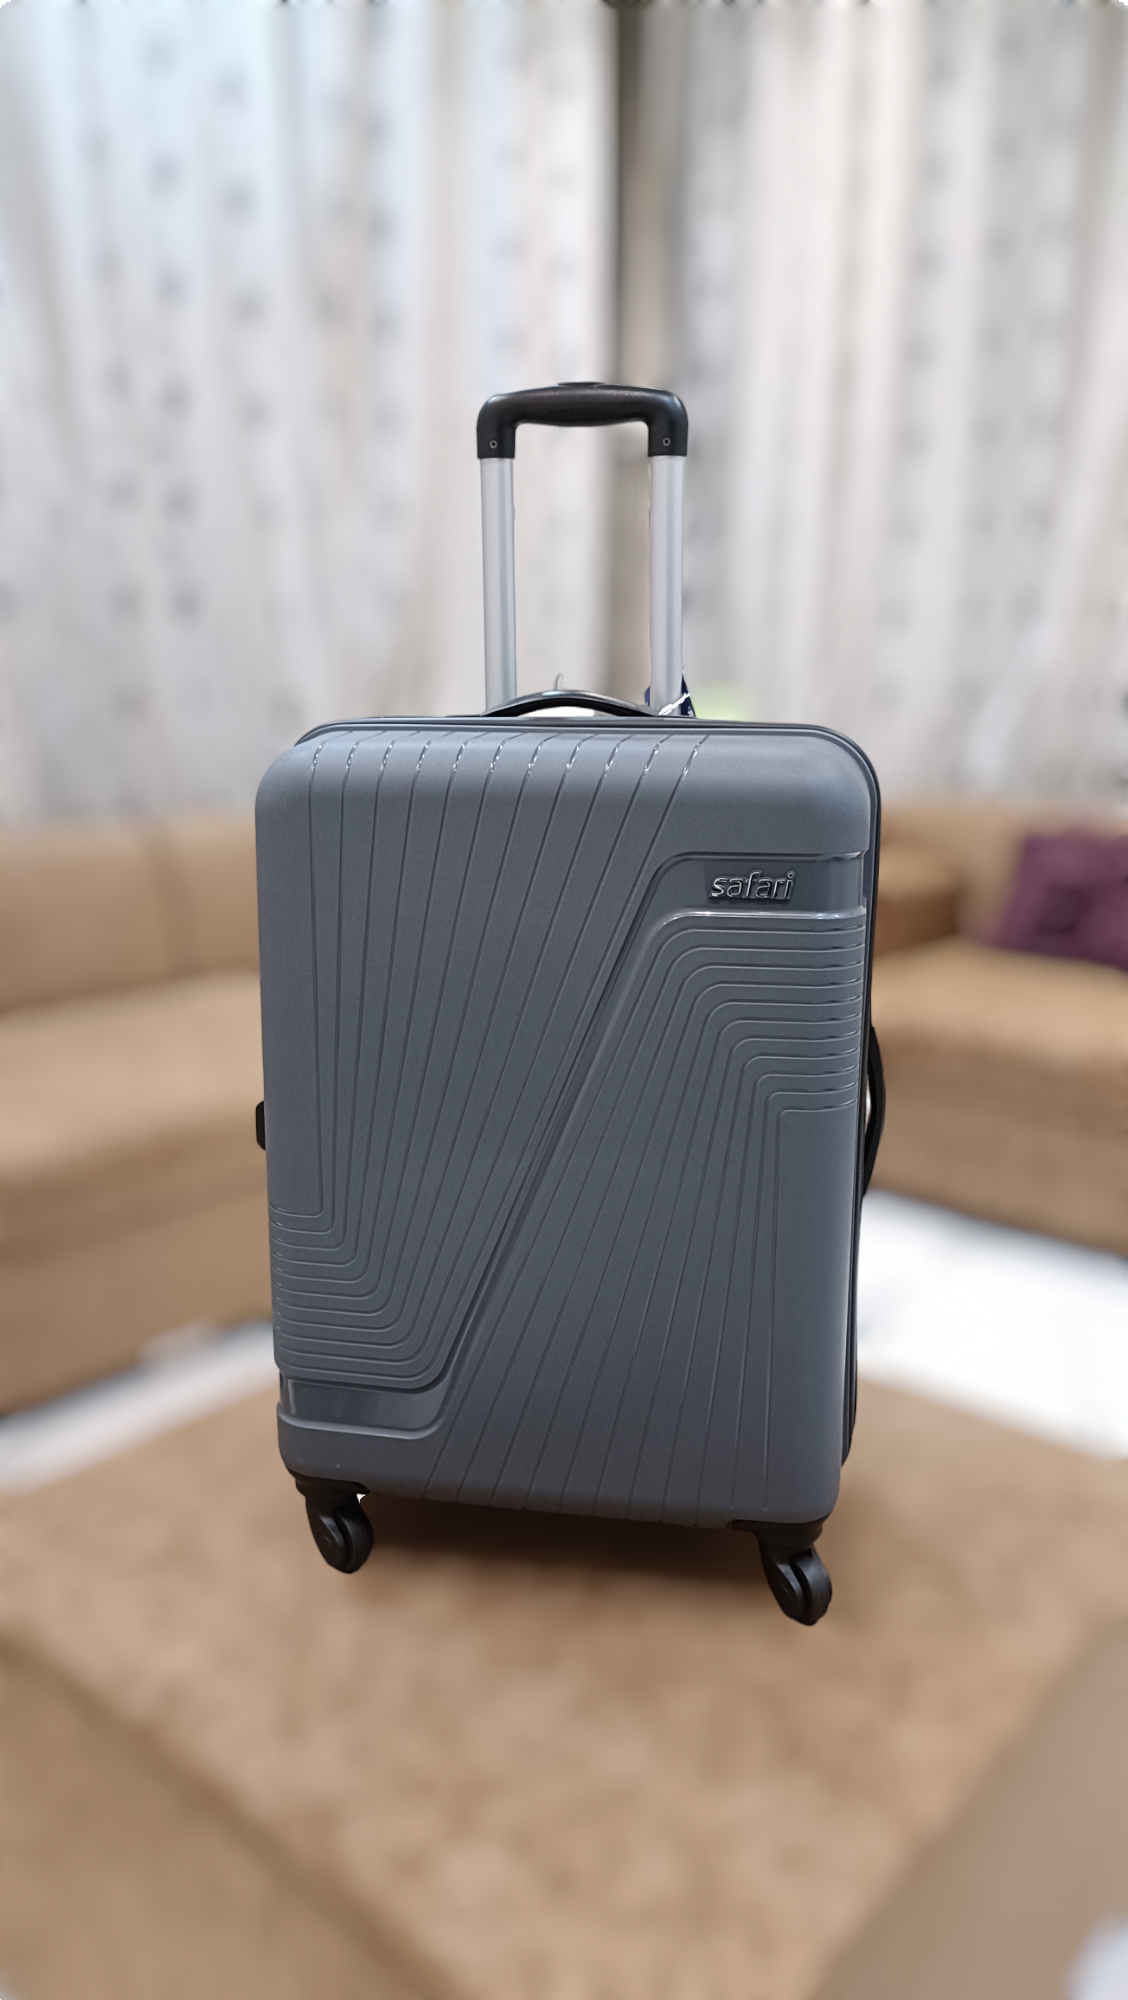 Safari polypropylene hard luggage 2 pcs set grey colour small and medium